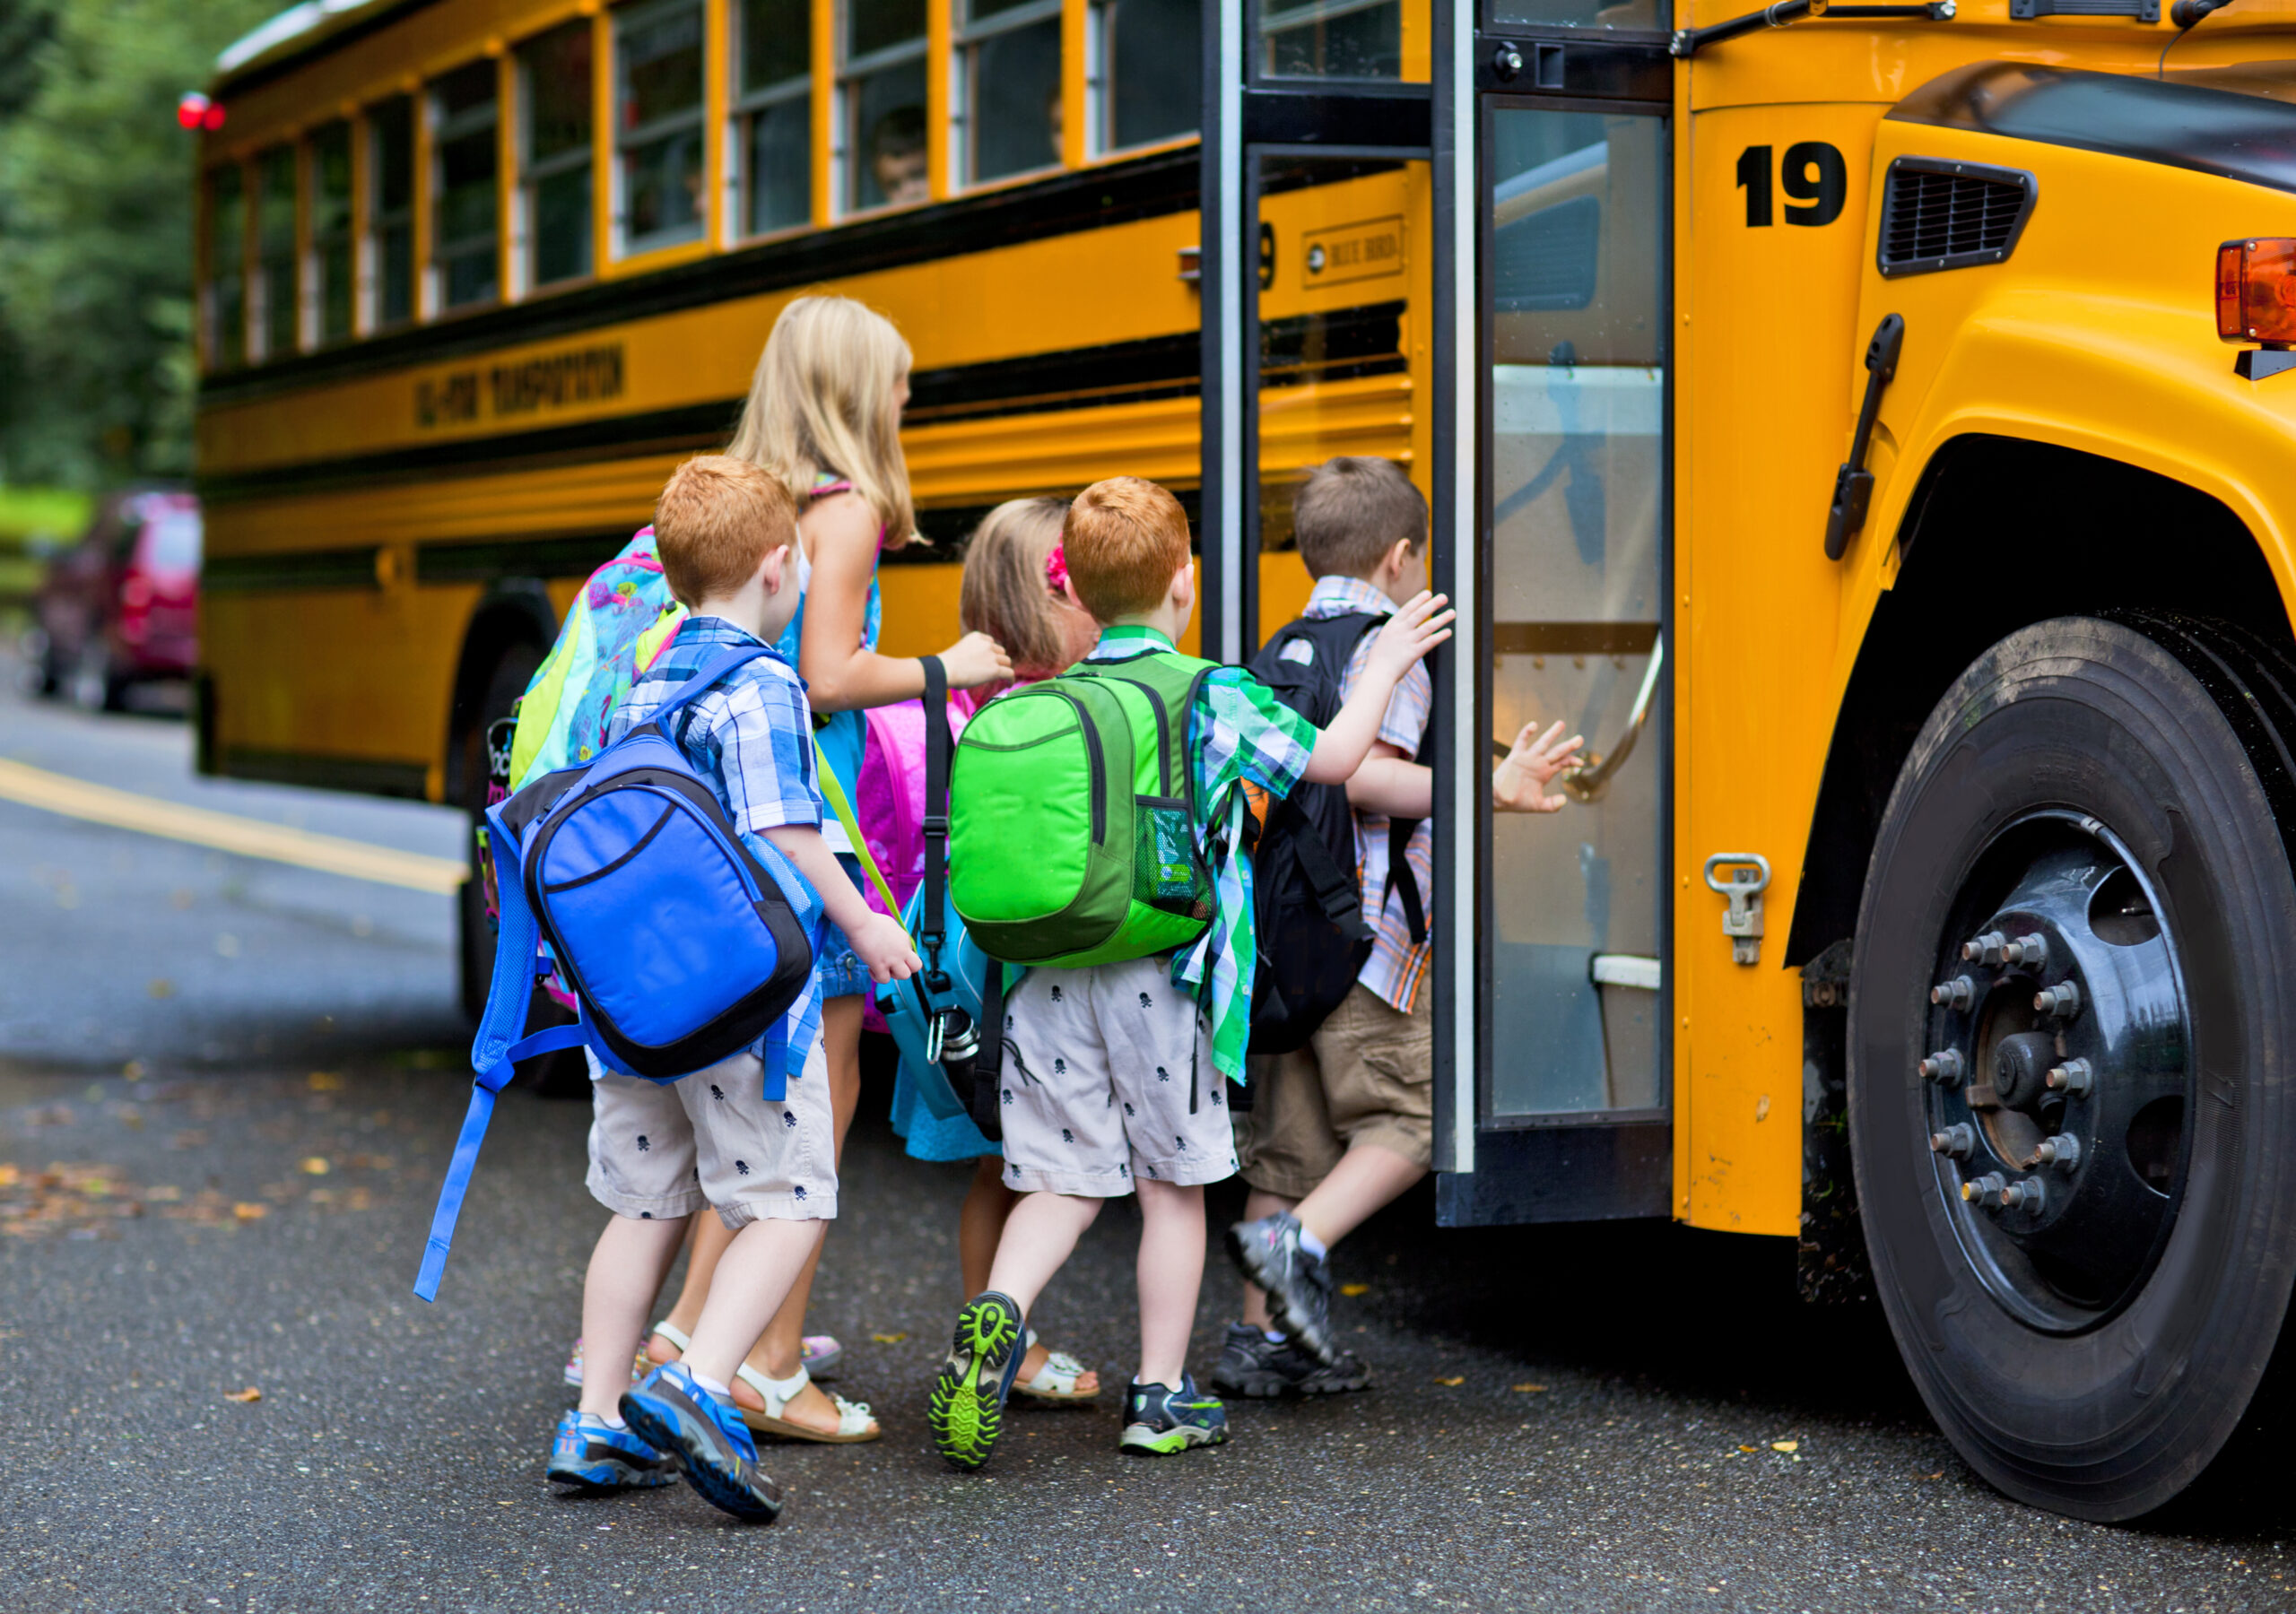 Children getting on the schoolbus